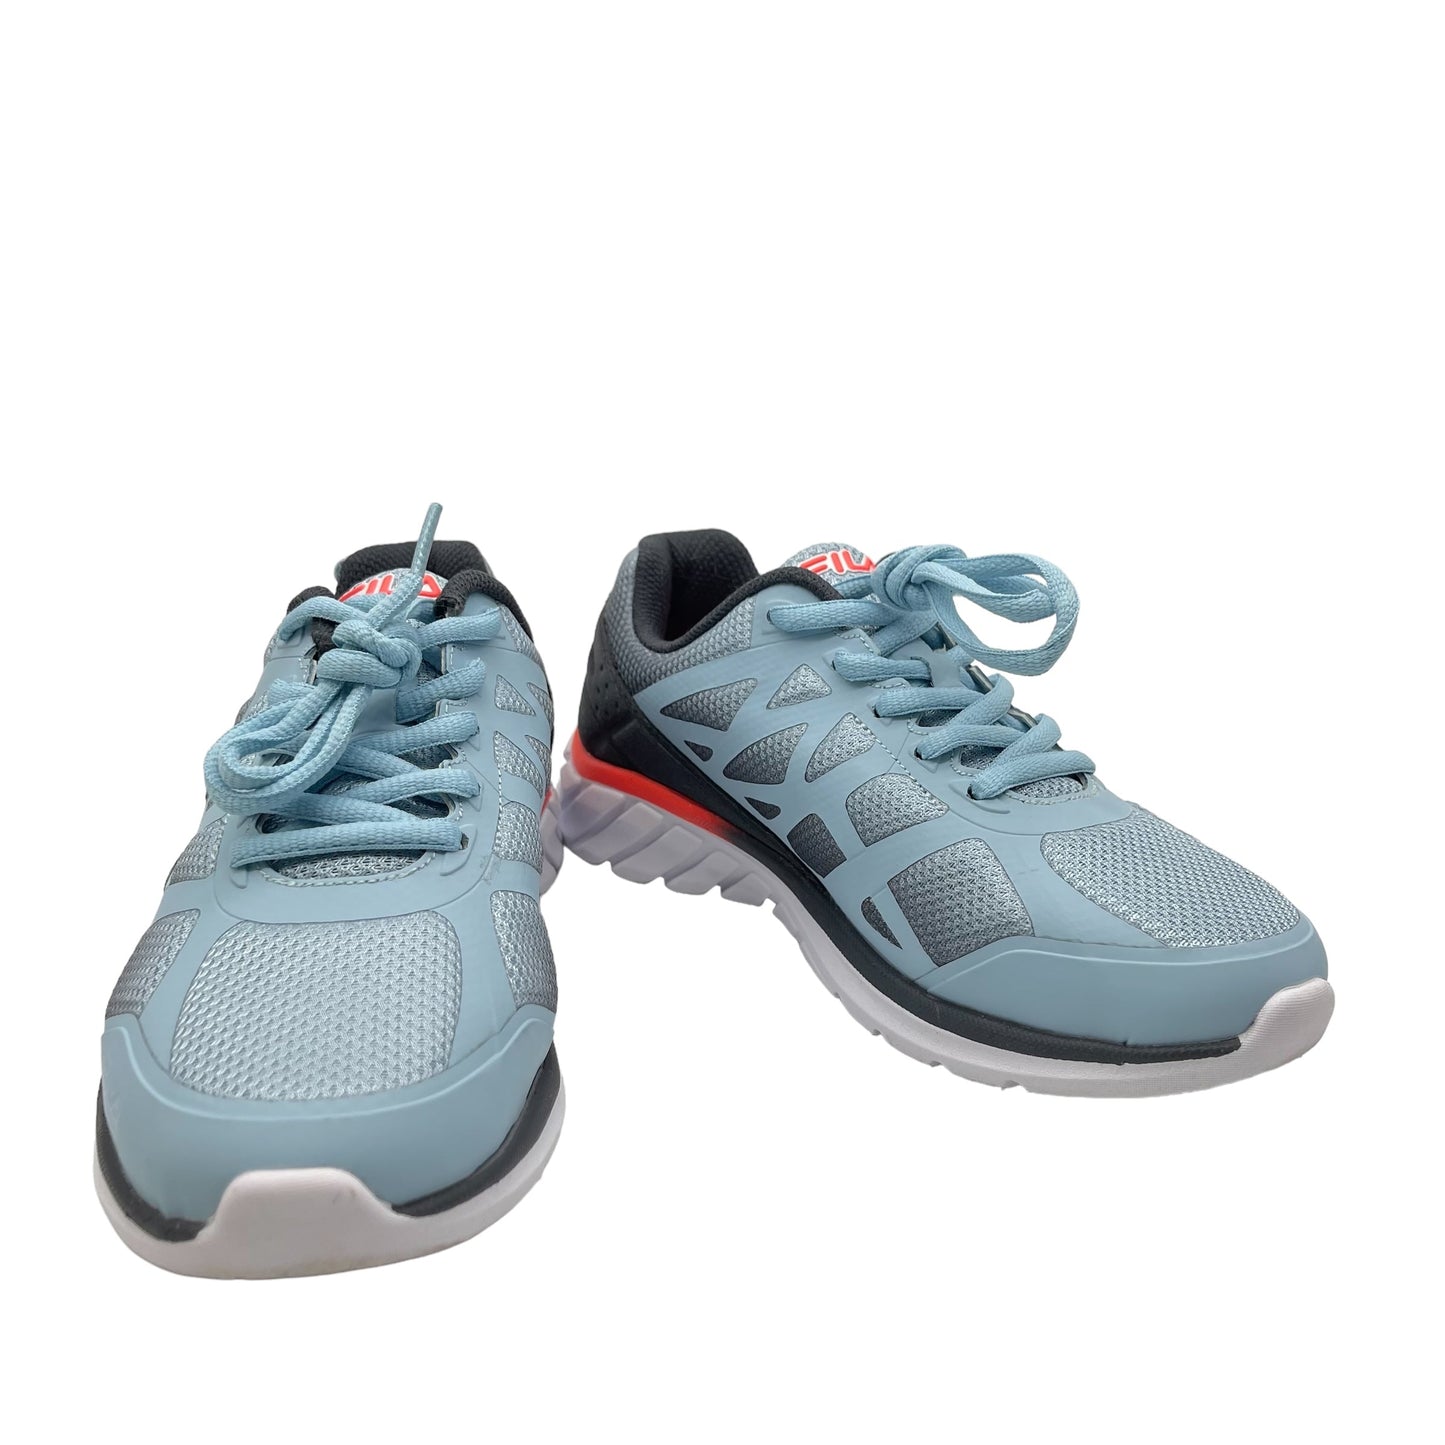 Blue Shoes Athletic Fila, Size 6